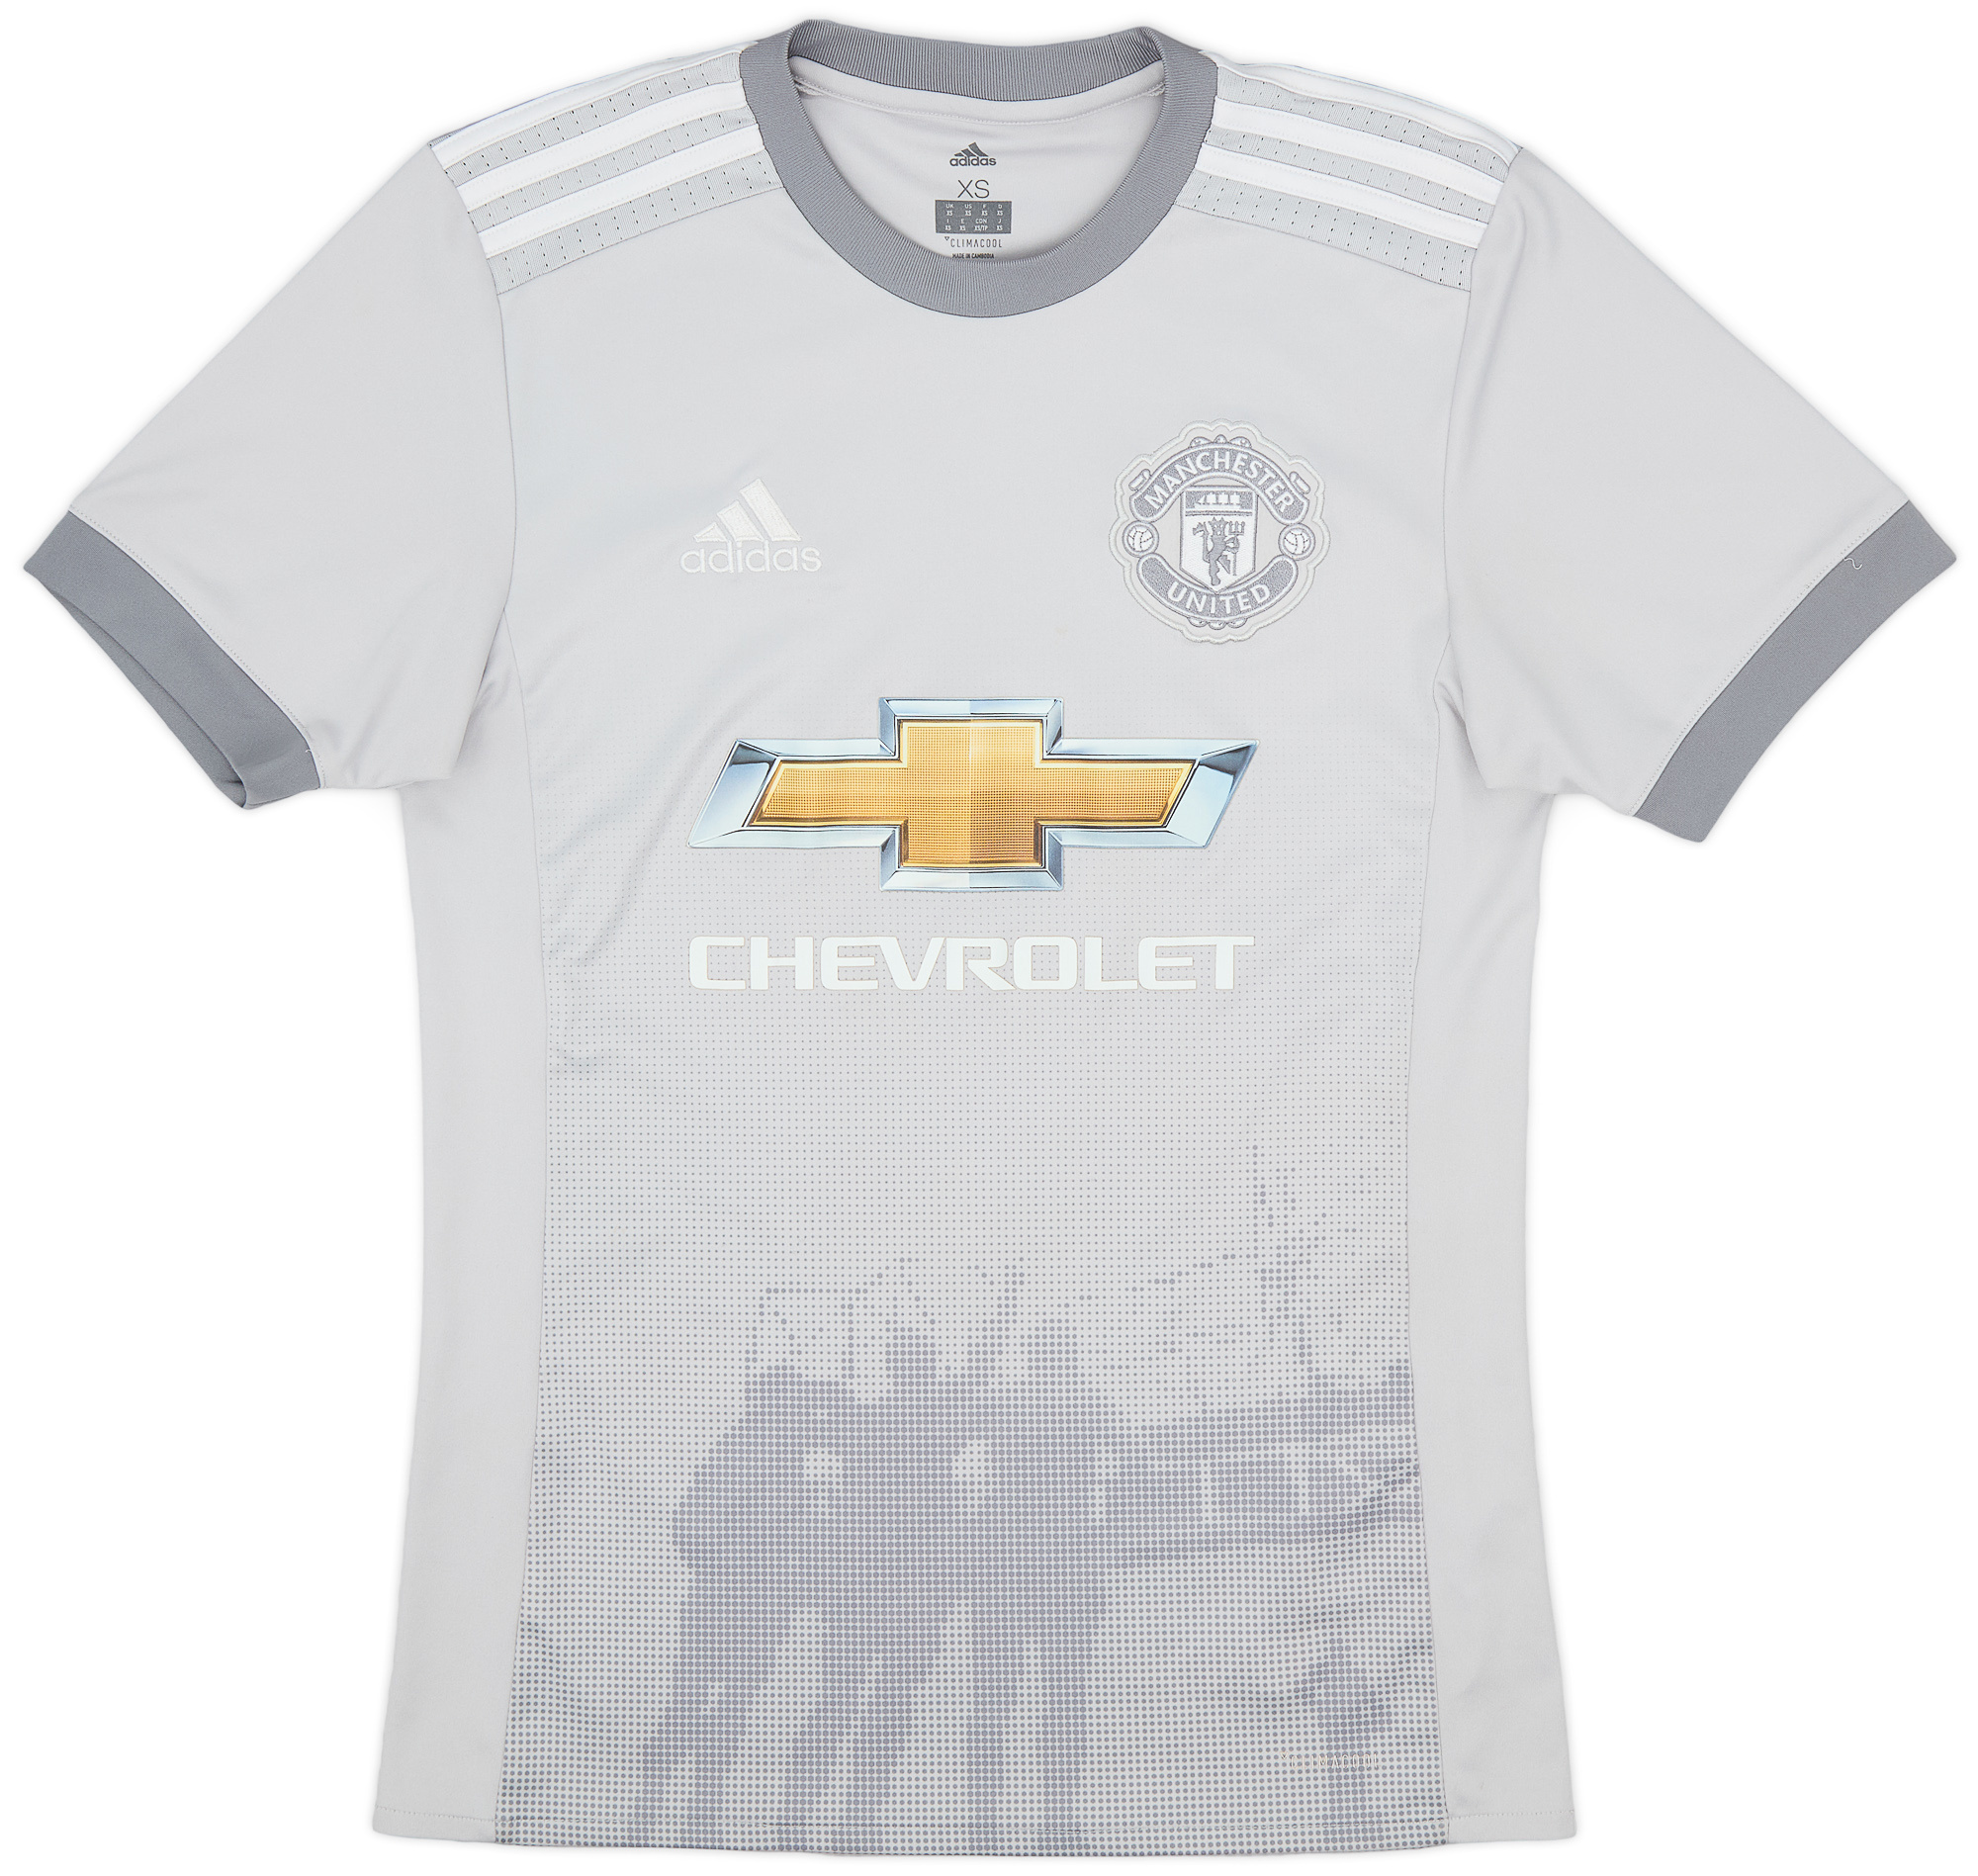 2017-18 Manchester United Third Shirt - 8/10 - ()